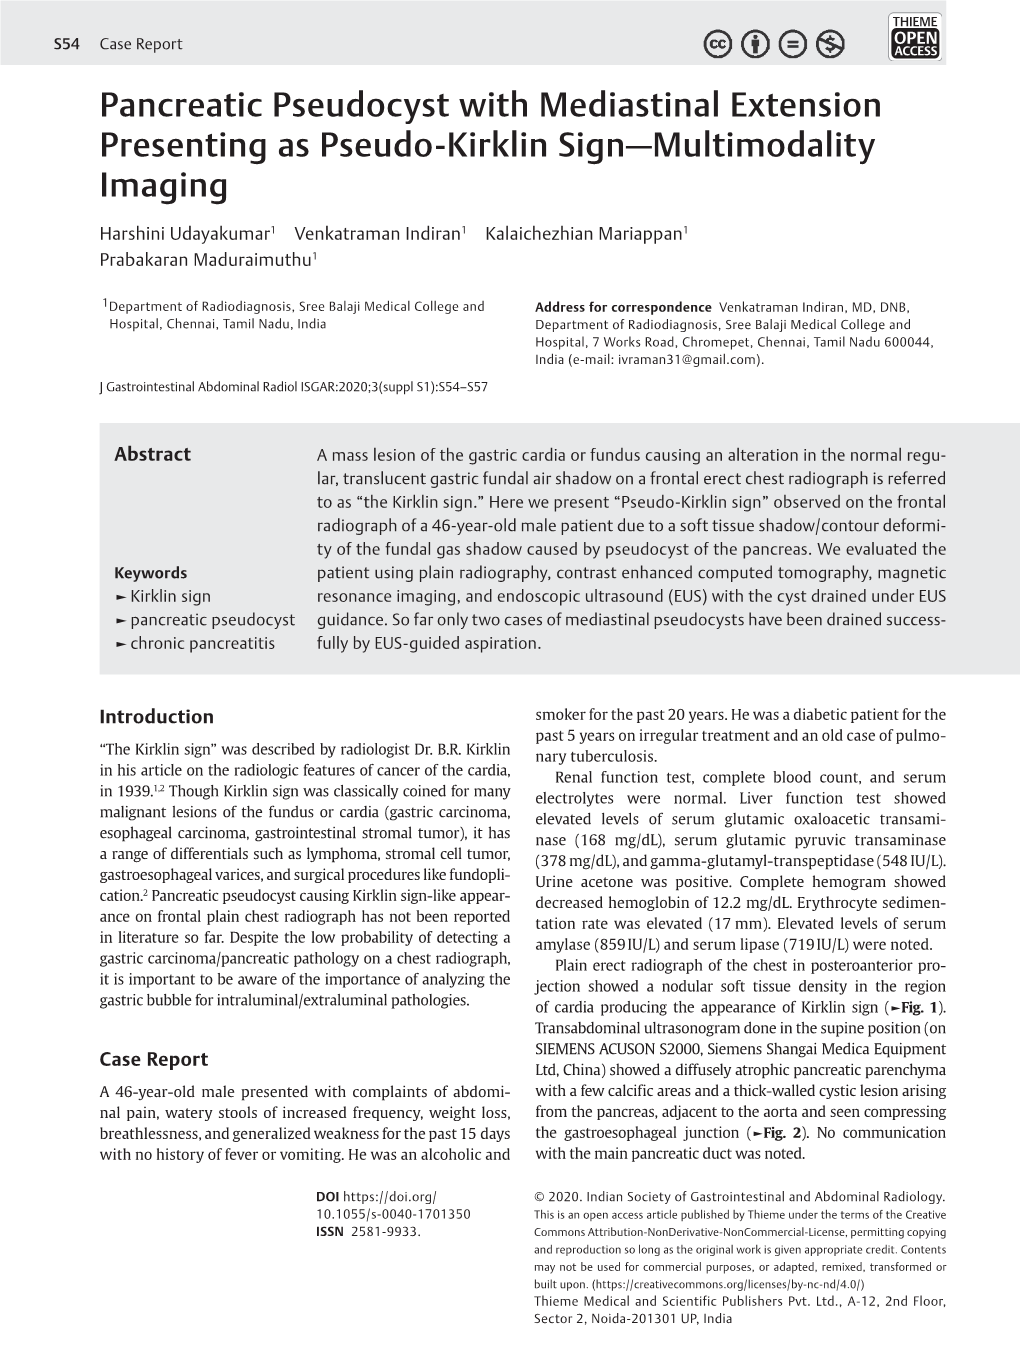 Pancreatic Pseudocyst with Mediastinal Extension Presenting As Pseudo-Kirklin Sign—Multimodality Imaging